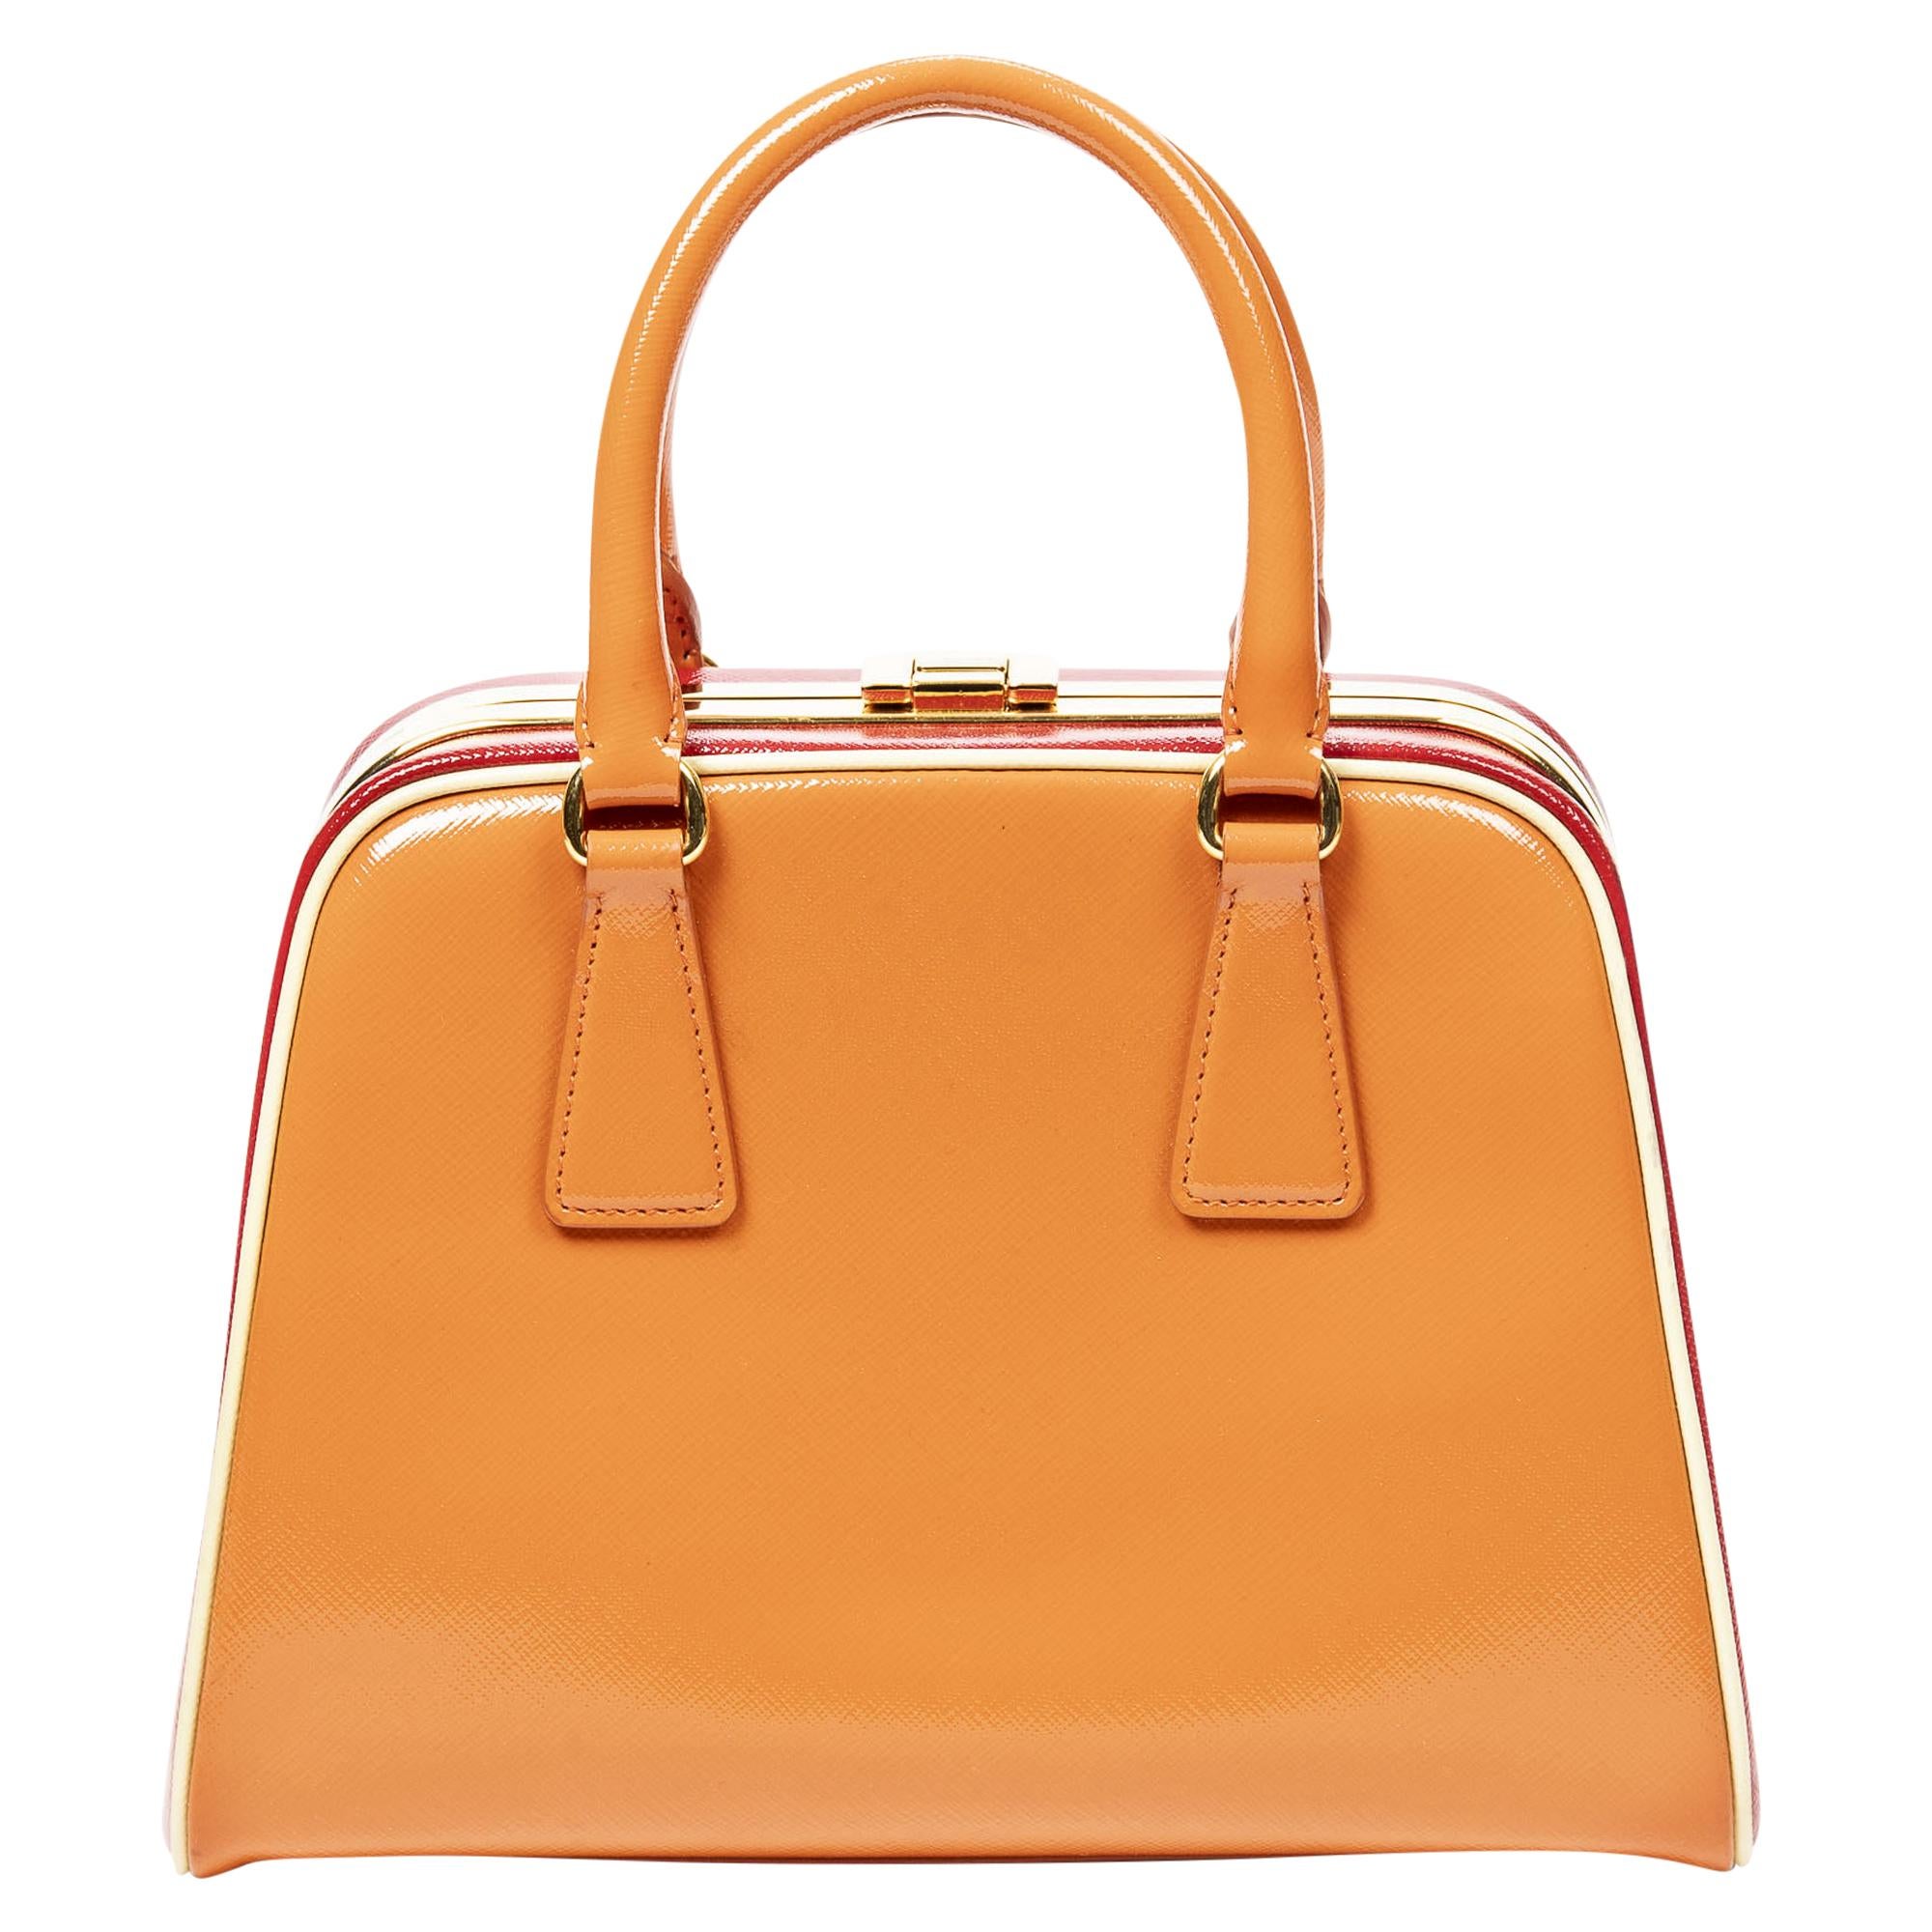 Prada Limited Edition Orange Frame Bag In Excellent Condition For Sale In Atlanta, GA